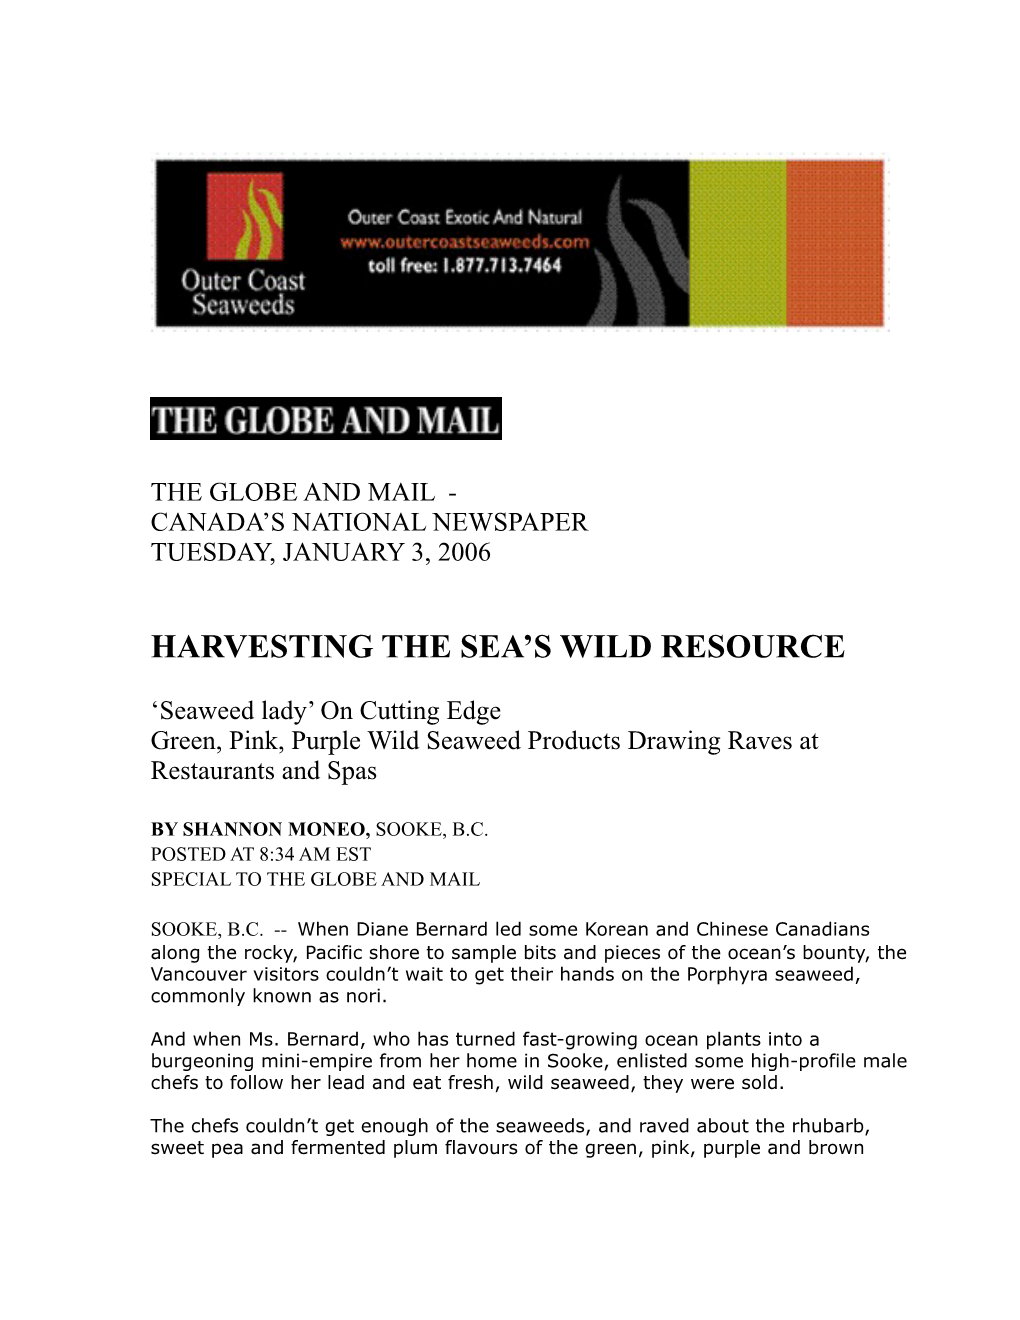 Harvesting the Sea's Wild Resource